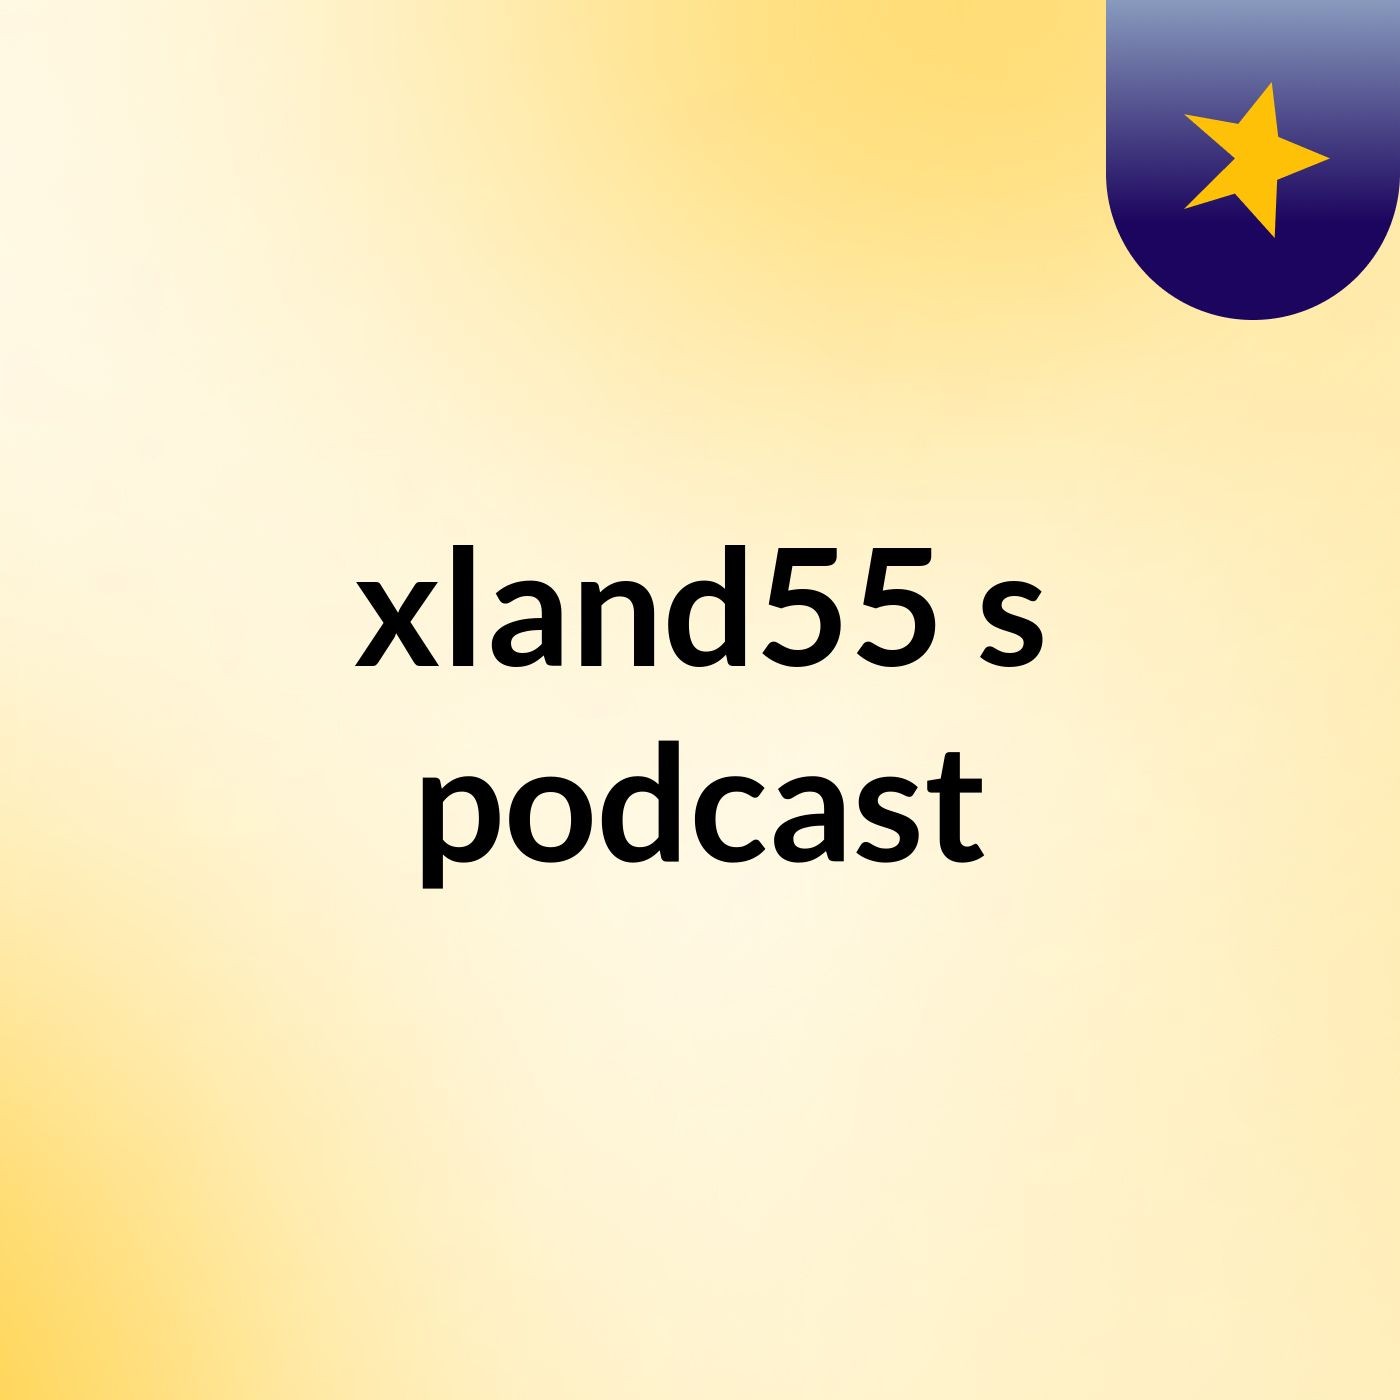 xland55's podcast